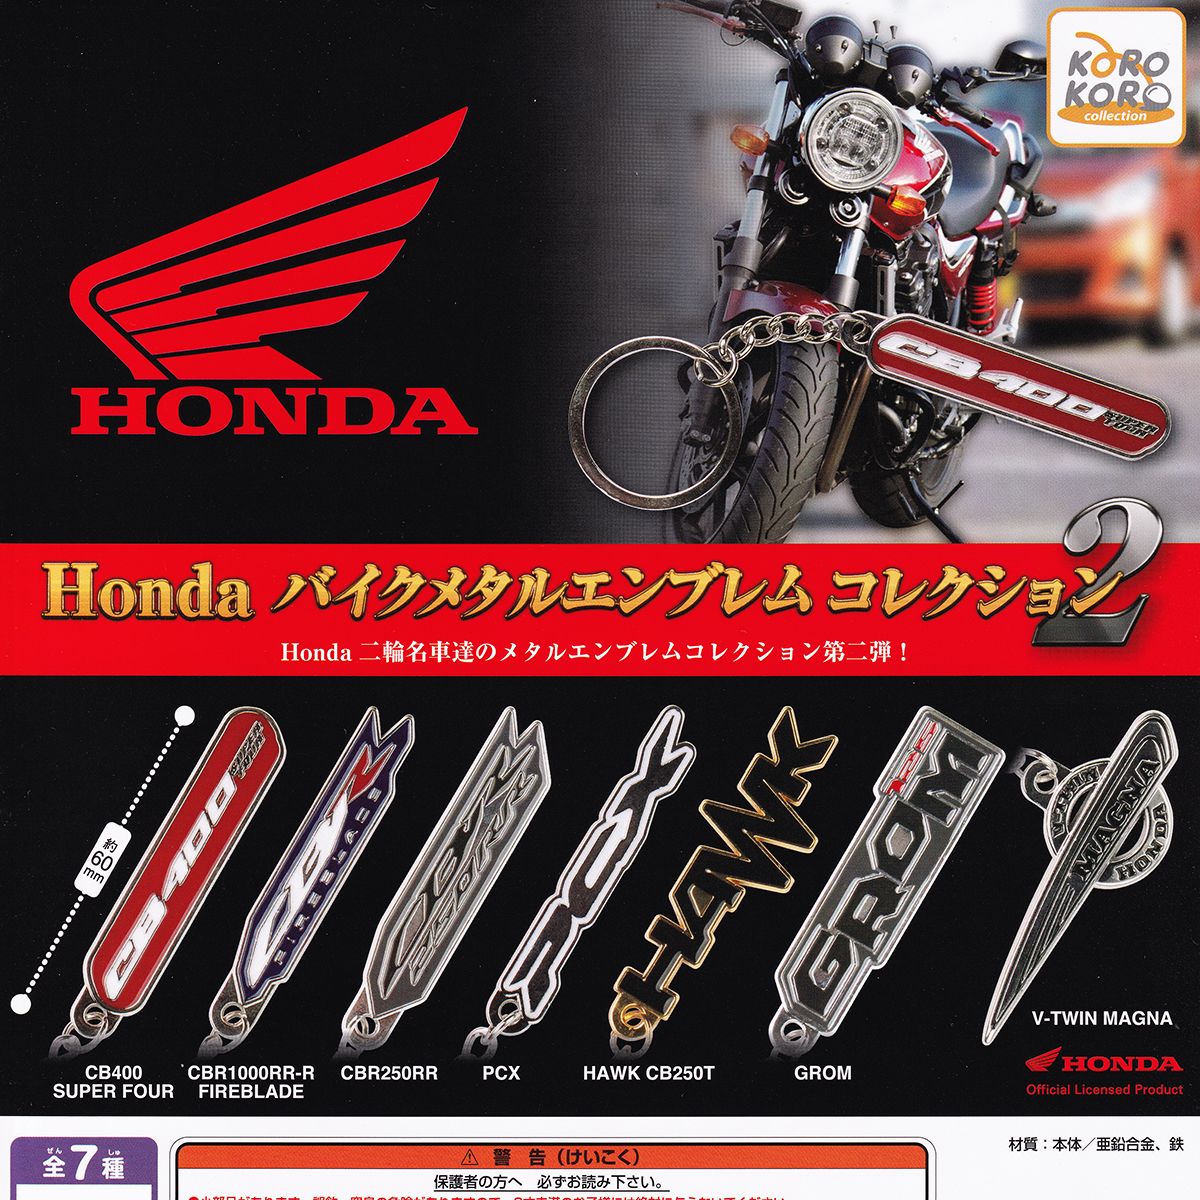 Honda ホンダバイクメタルエンブレムコレクション2 V-TWIN MAGNA